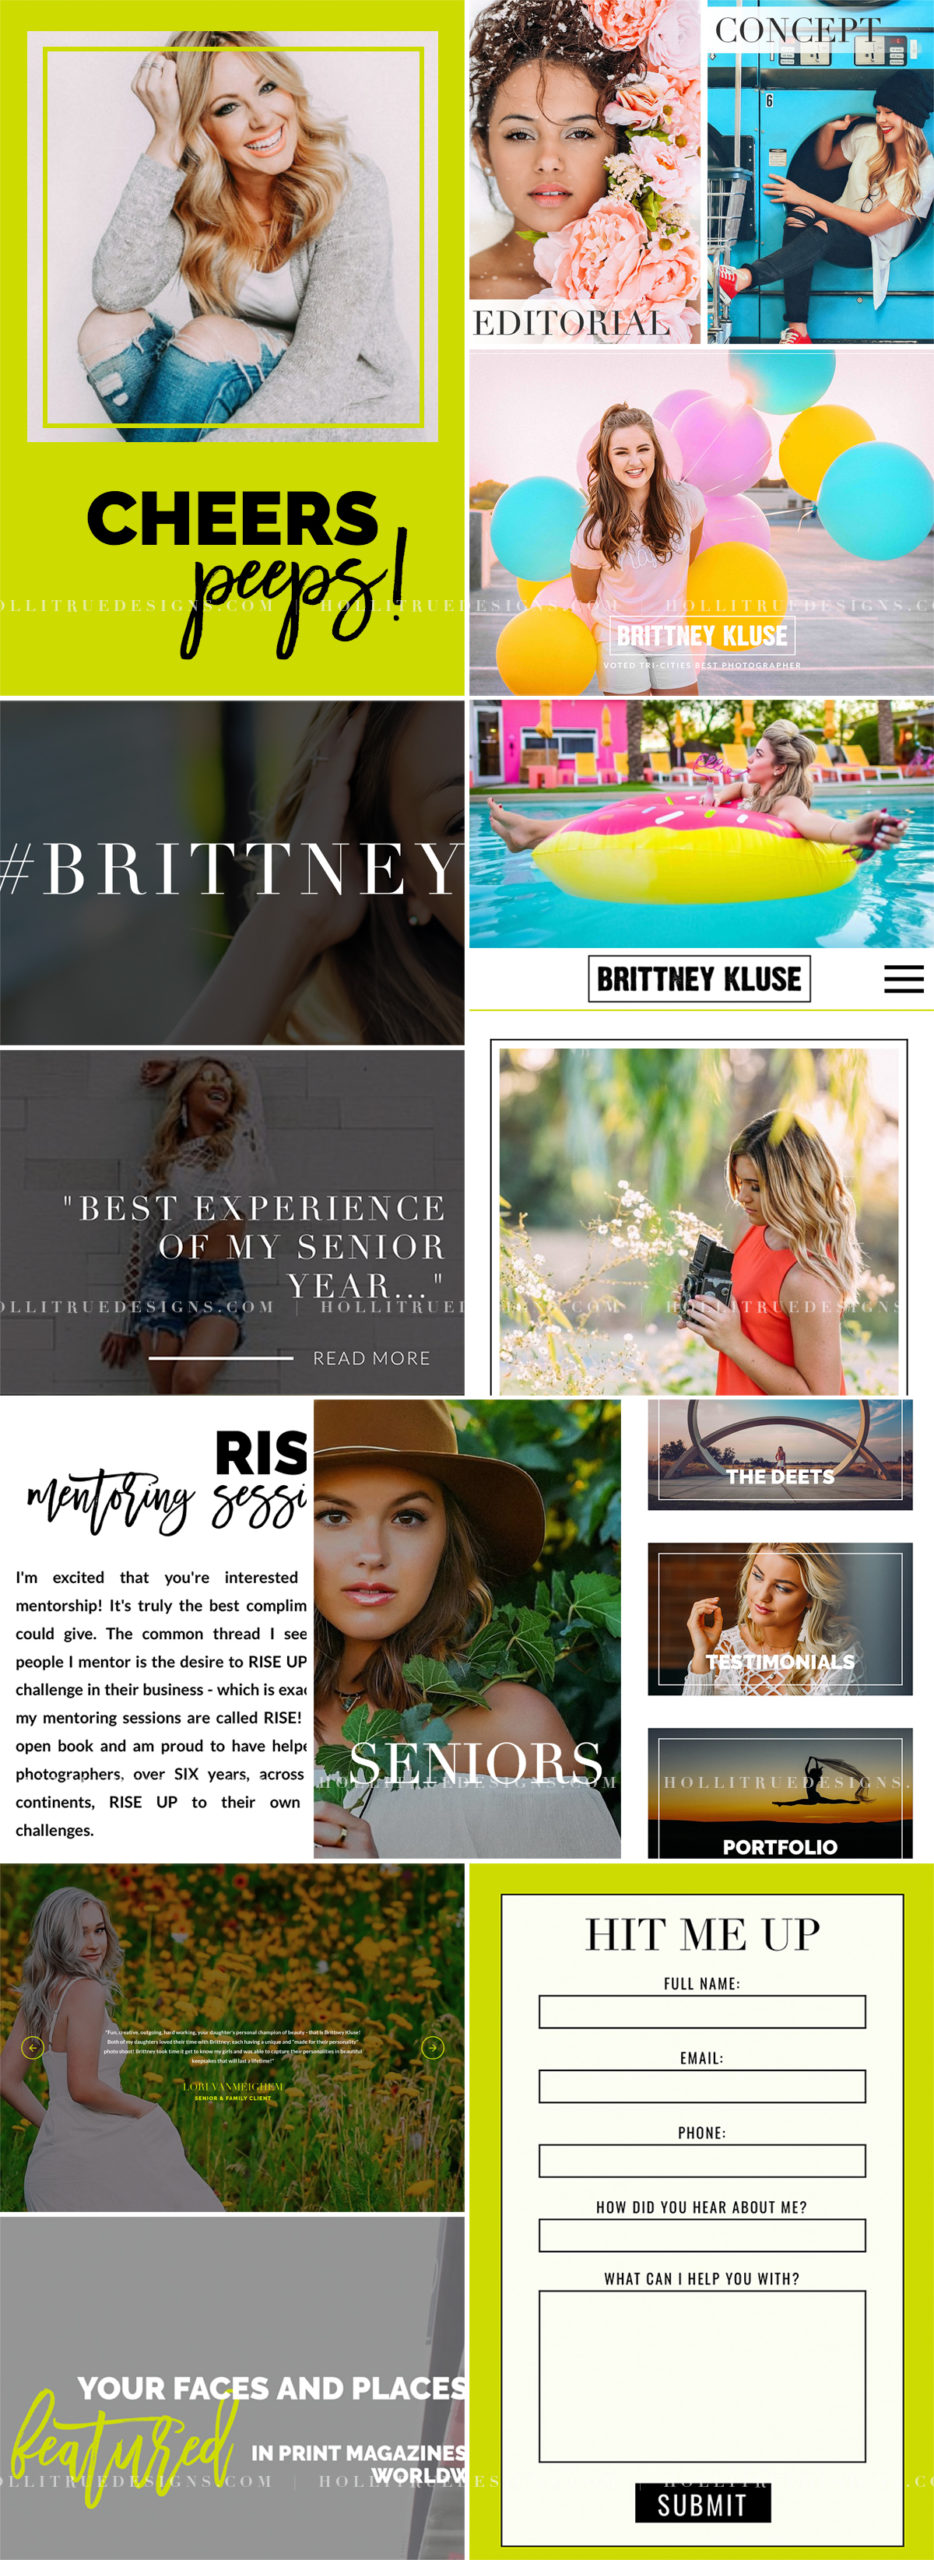 Showit Website Designer, Holli True, launches a new website for Washing-based Lifestyle & Senior Photographer, Brittney Kluse